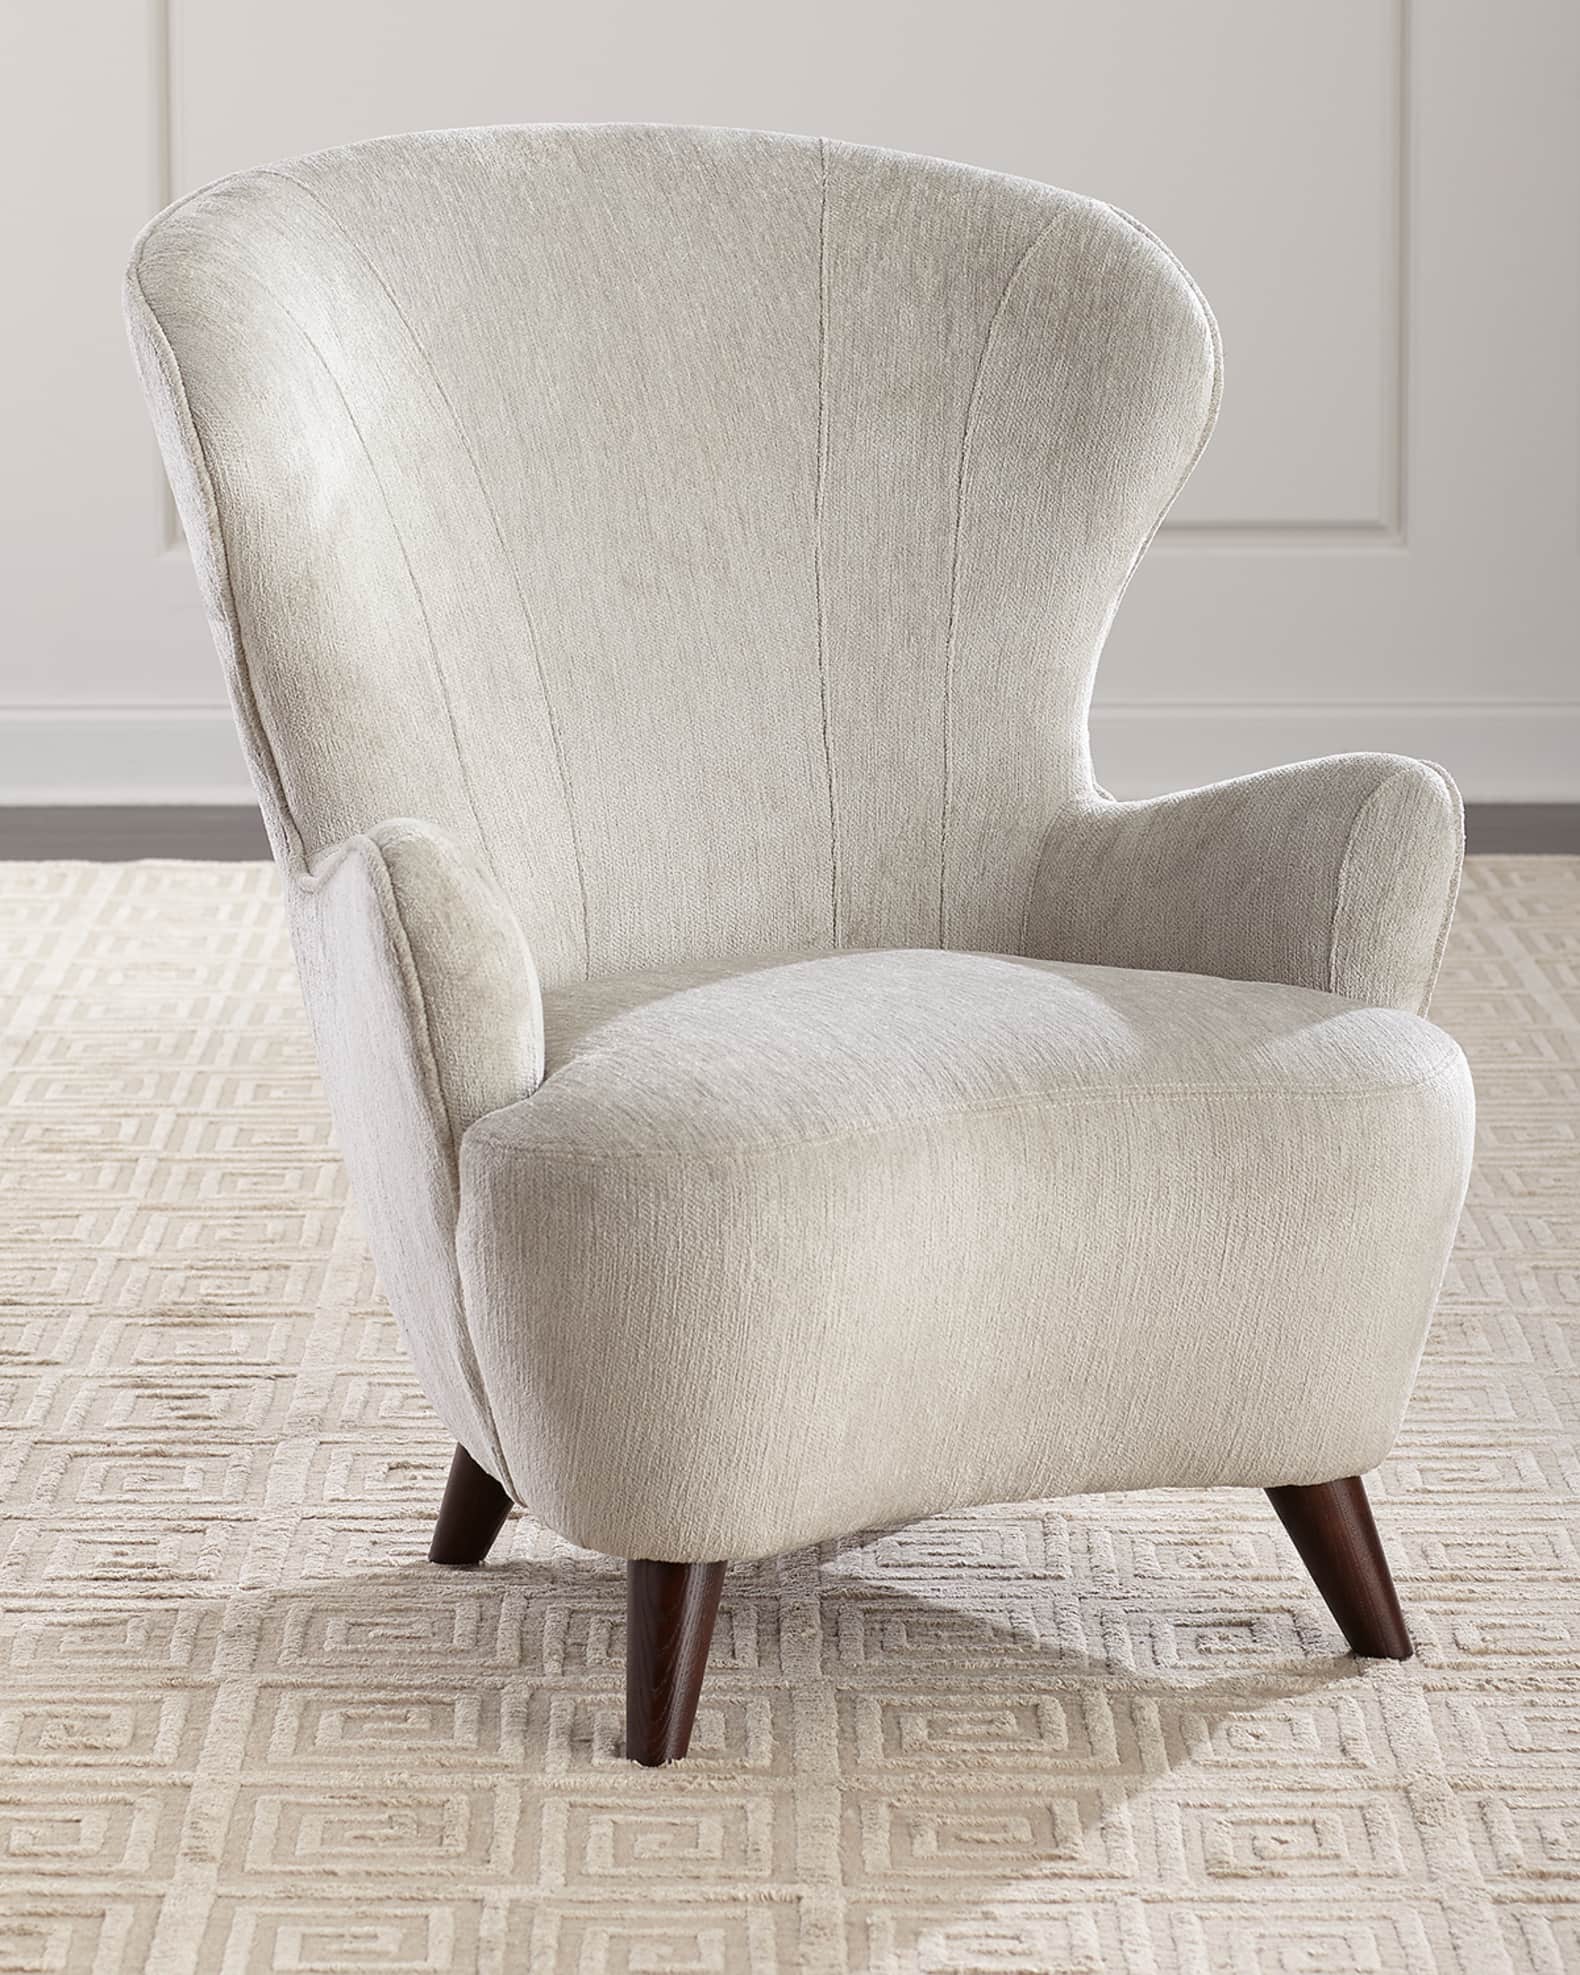 Interlude Home Ollie Chair | Neiman Marcus